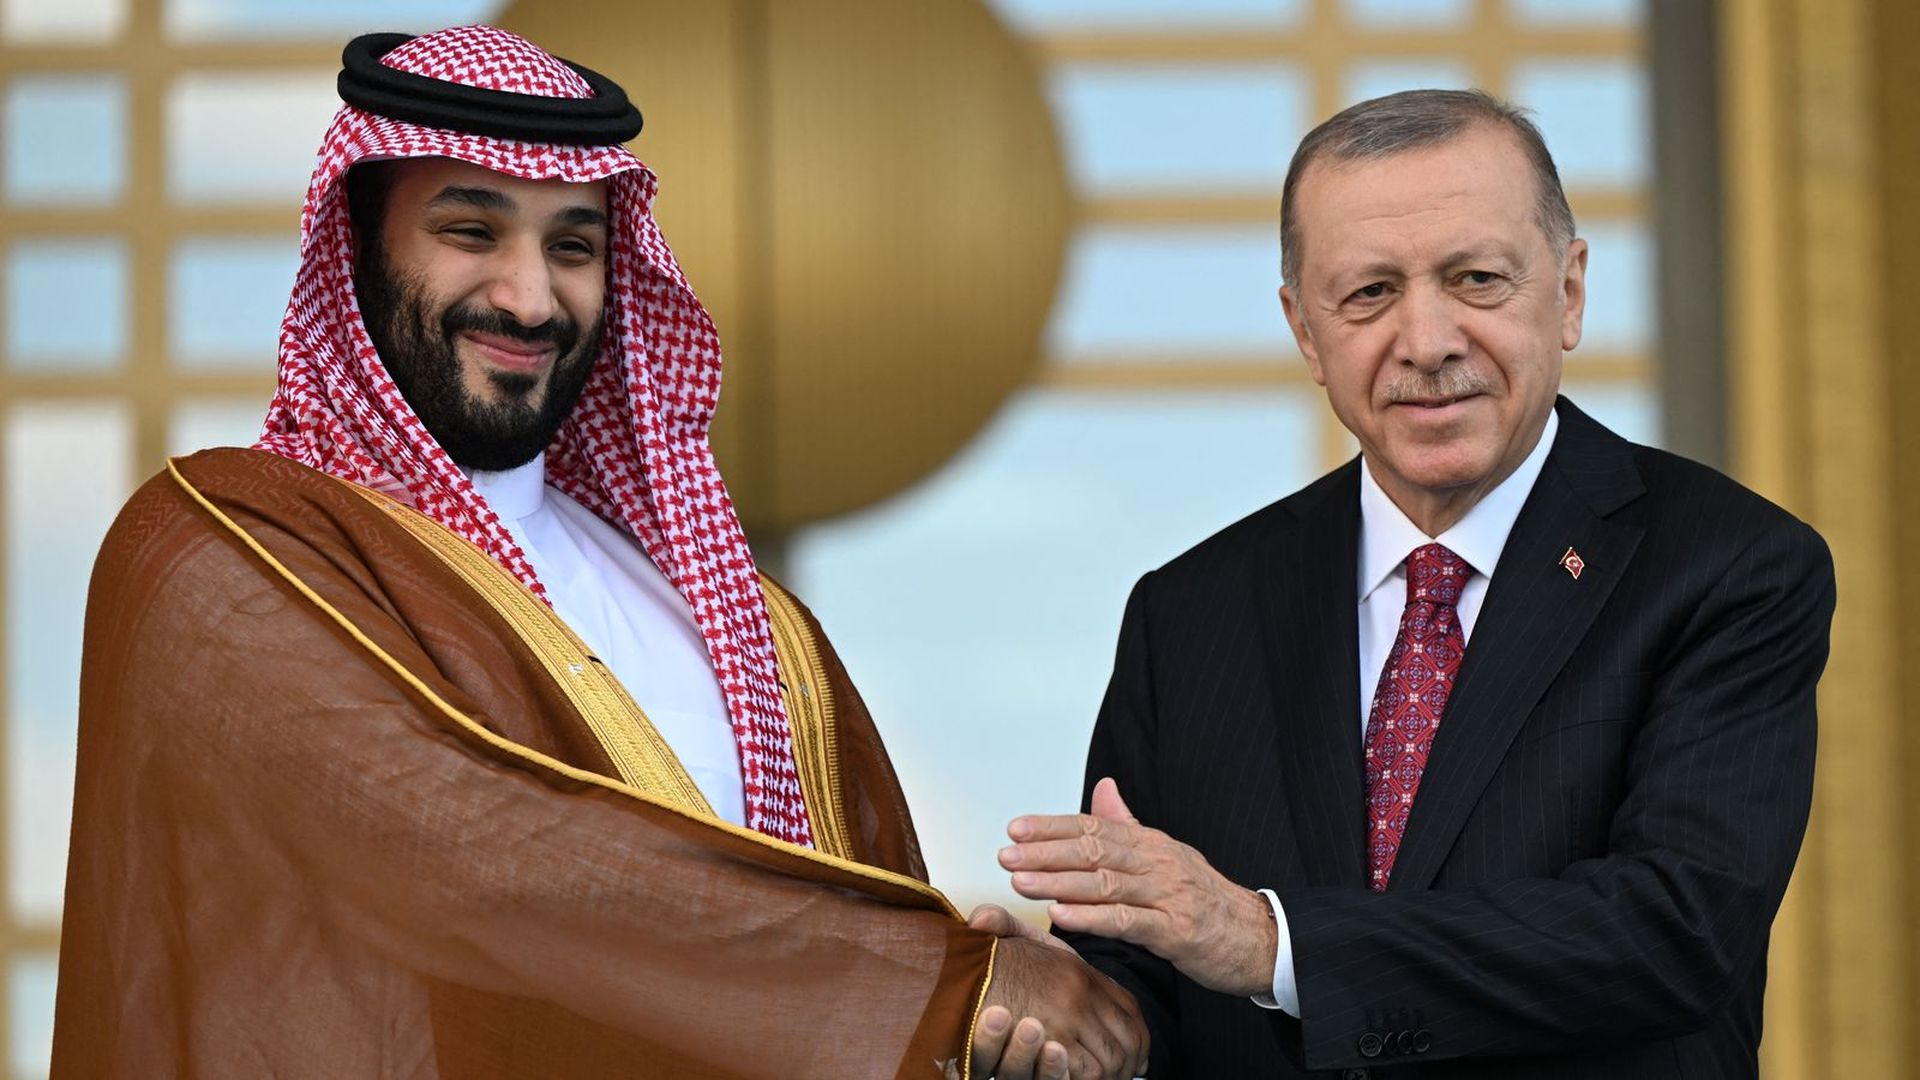 Turkish President Recep Tayyip Erdoğan welcomes Saudi Crown Prince Mohammed bin Salman to Turkey on June 22. Photo: Ozan Kose/AFP via Getty Images